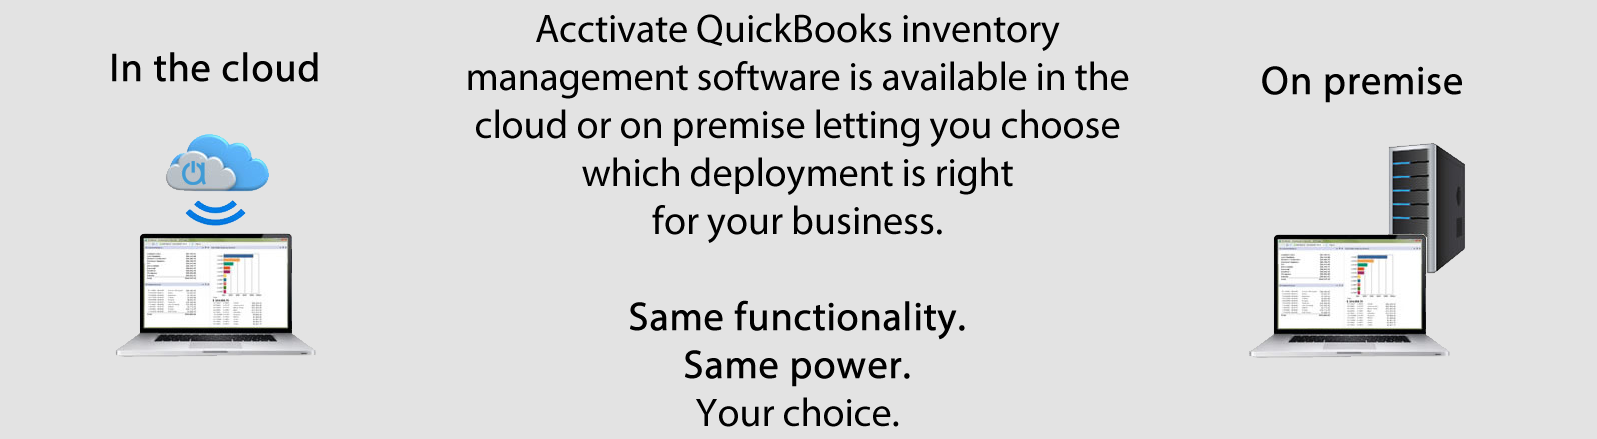 quickbooks inventory software